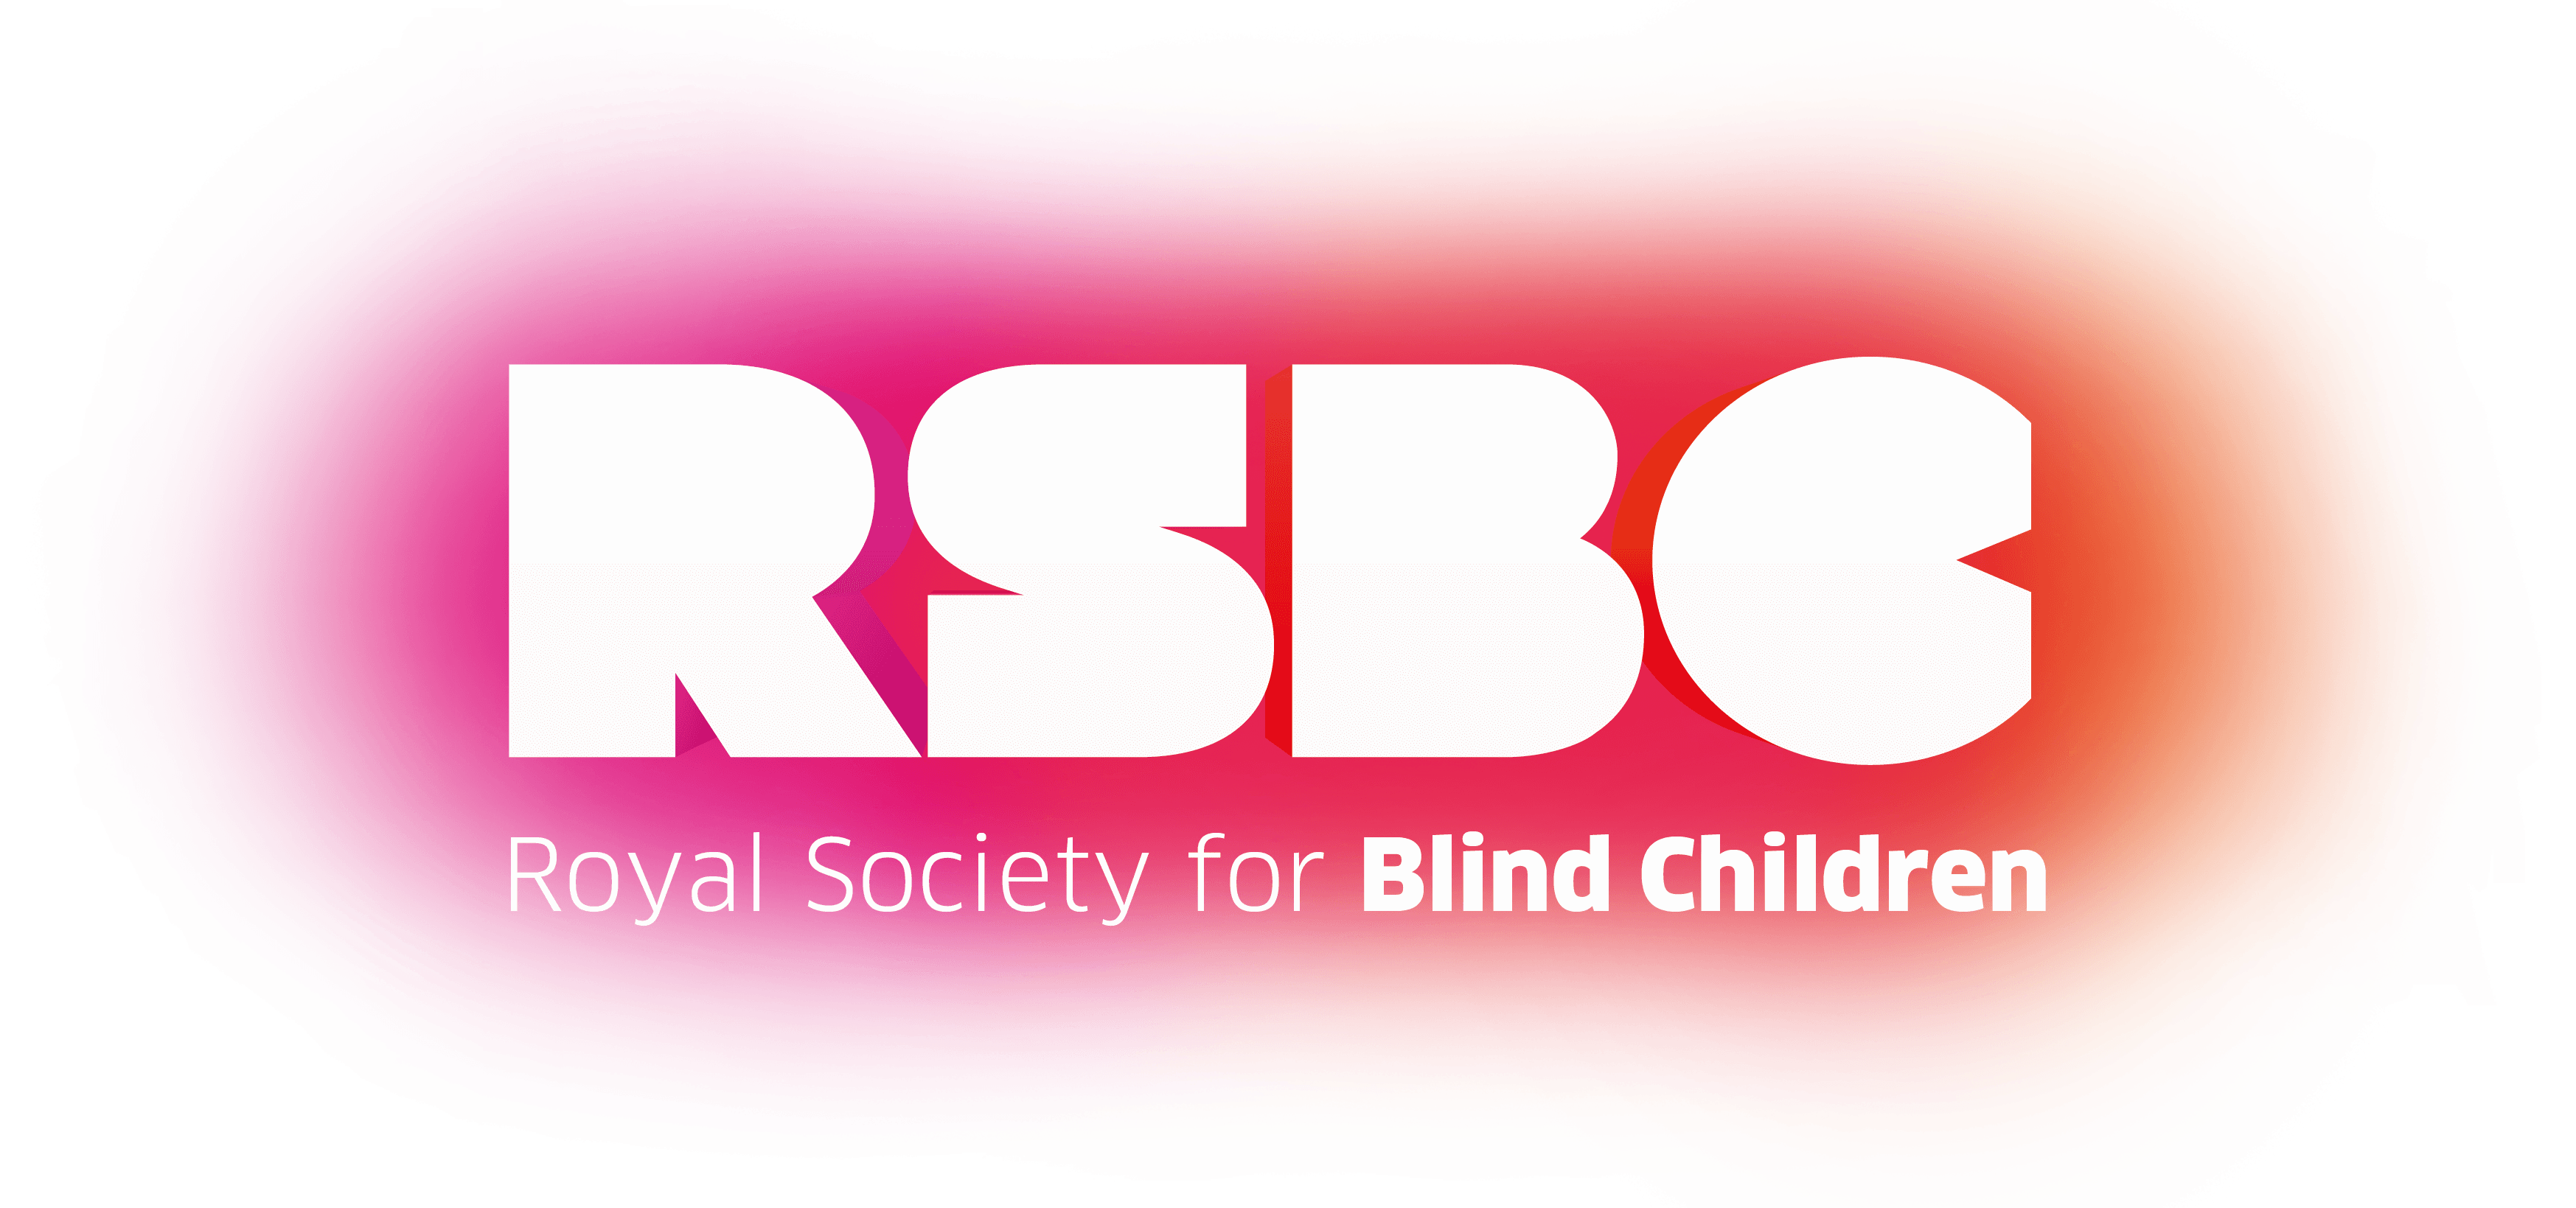 RSBC Logo